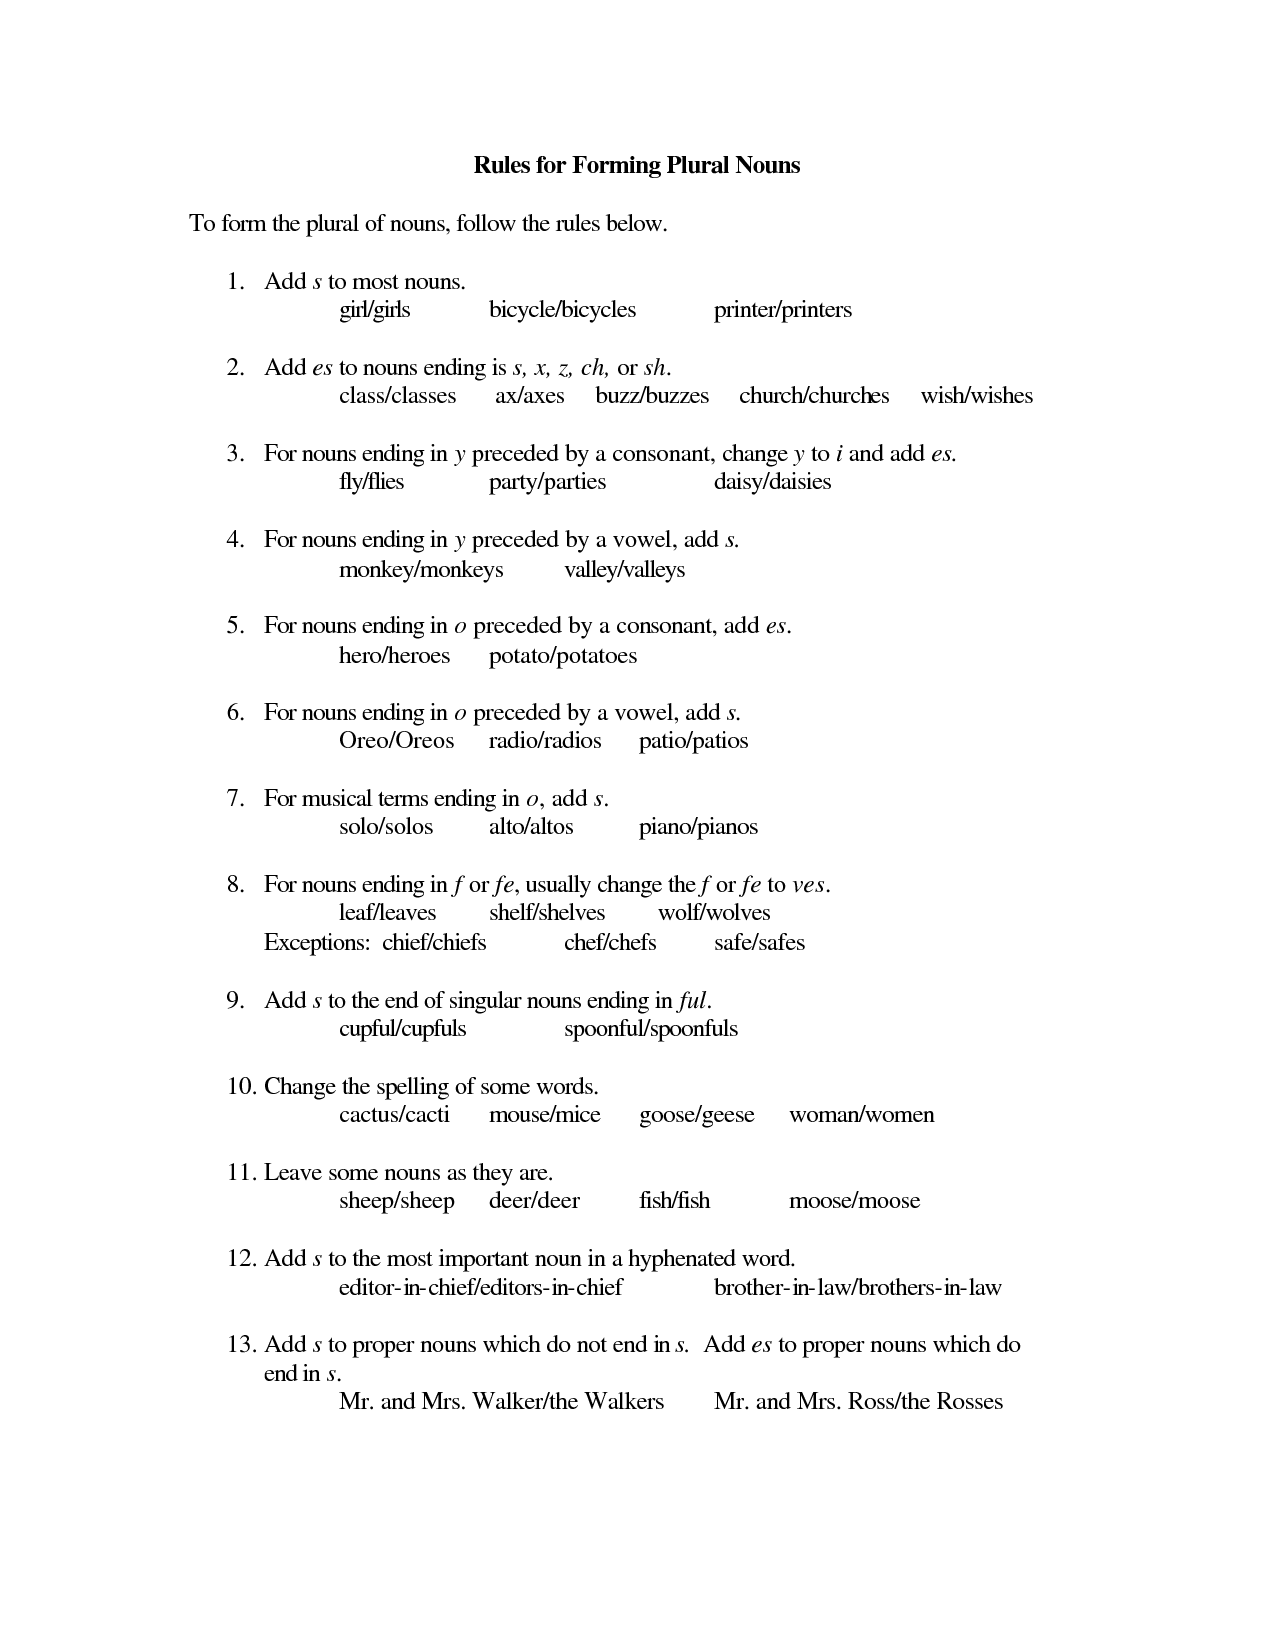 17-worksheets-possessive-pronouns-sentence-worksheeto